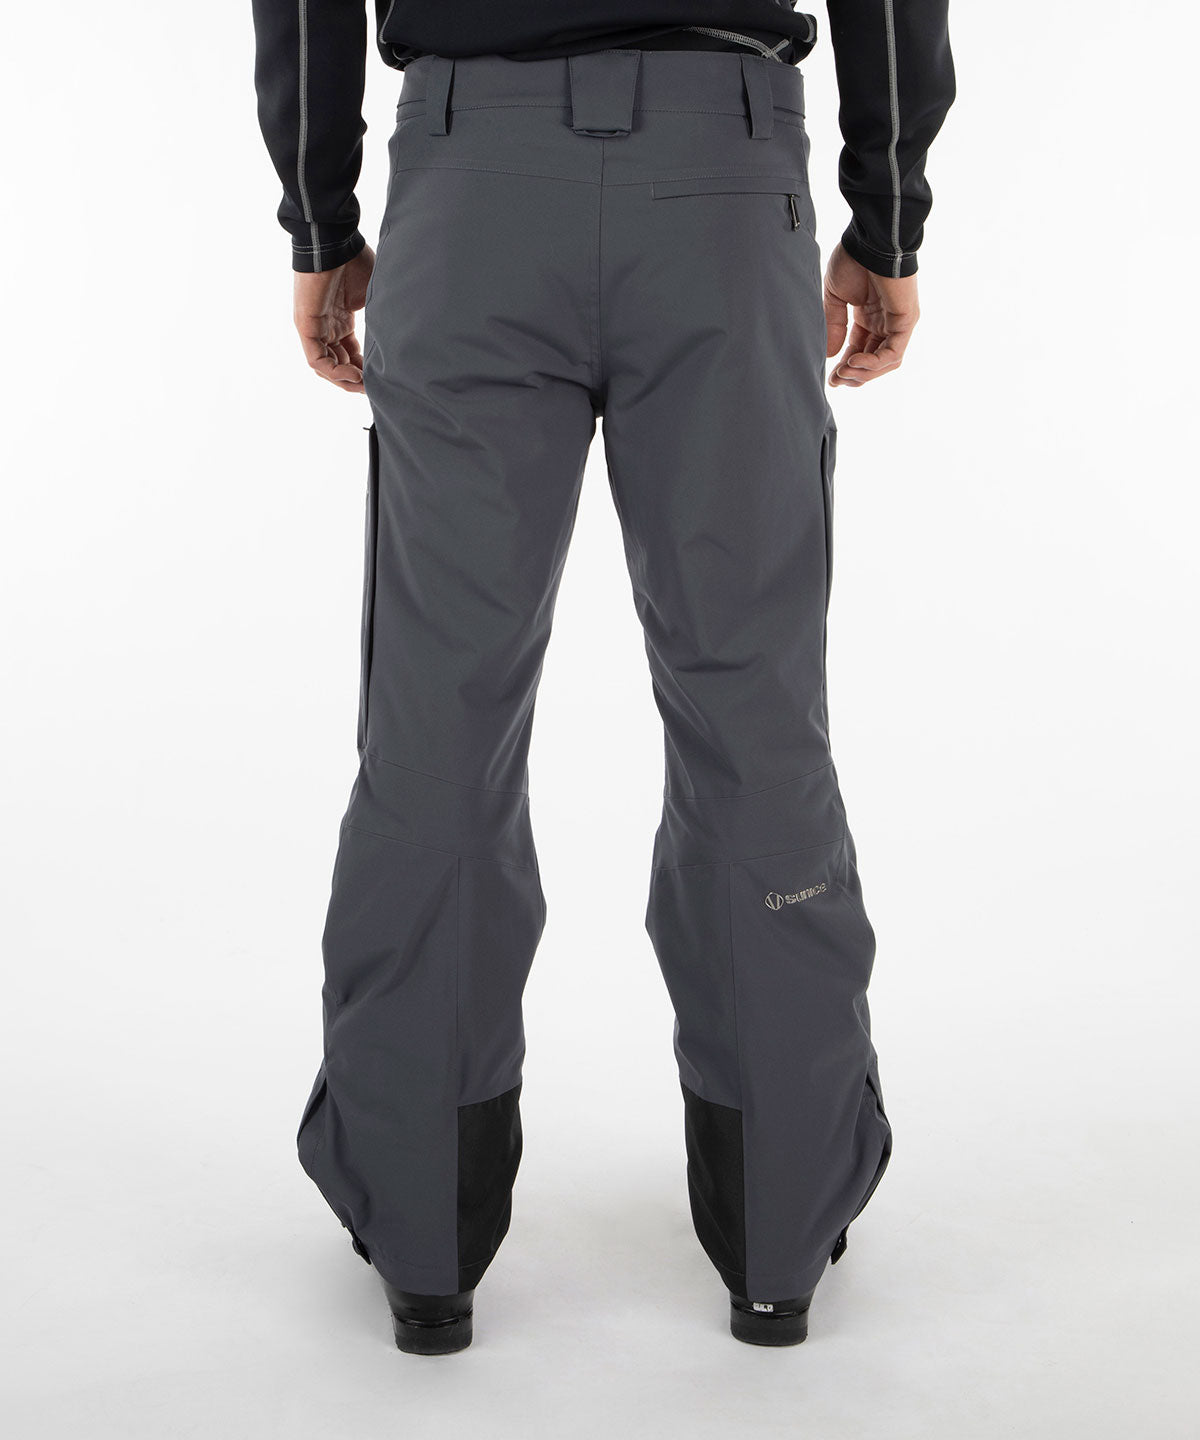 Men's Snow Pant with PrimaLoft® in Black from Joe Fresh